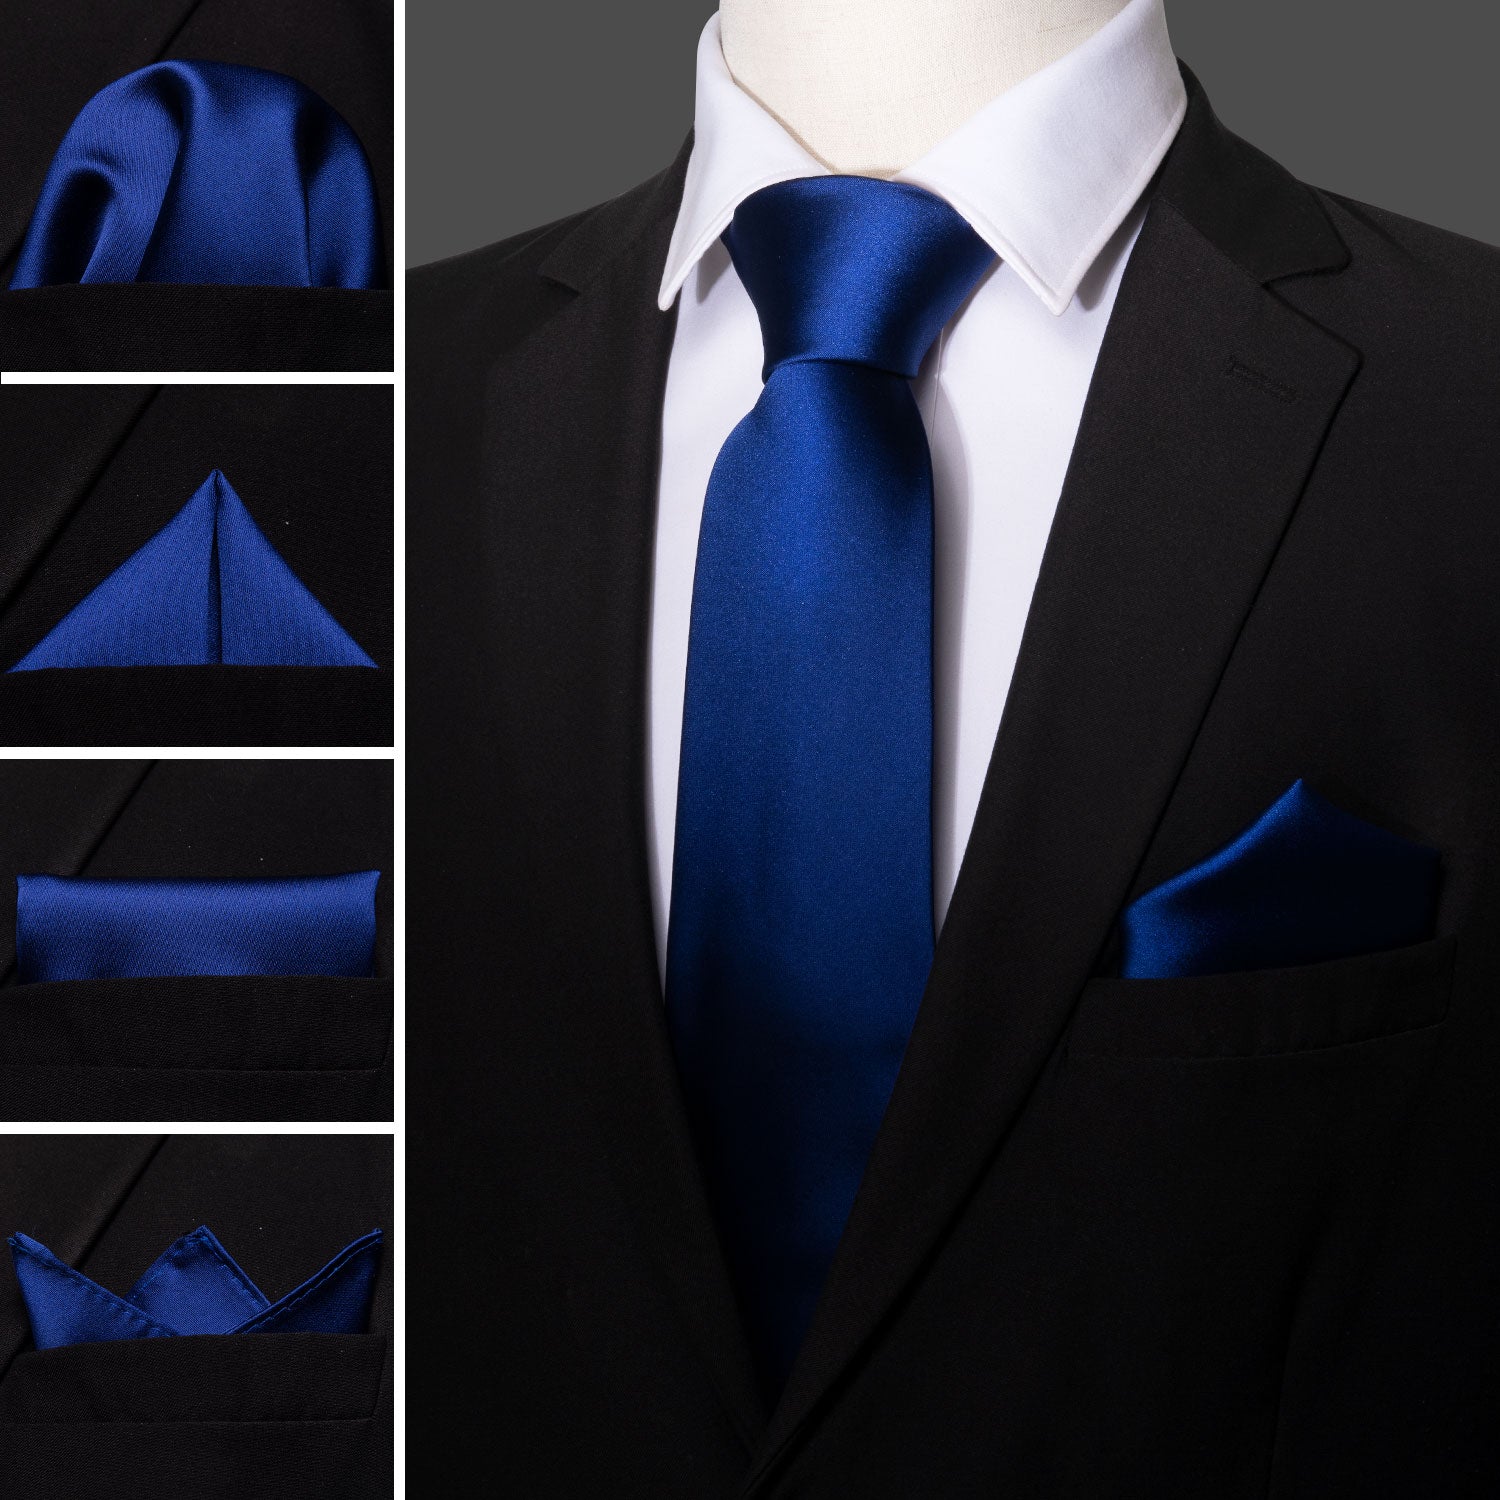  Blue Tie Sapphire Solid Men's Silk Tie Set with Lapel Pin Brooch